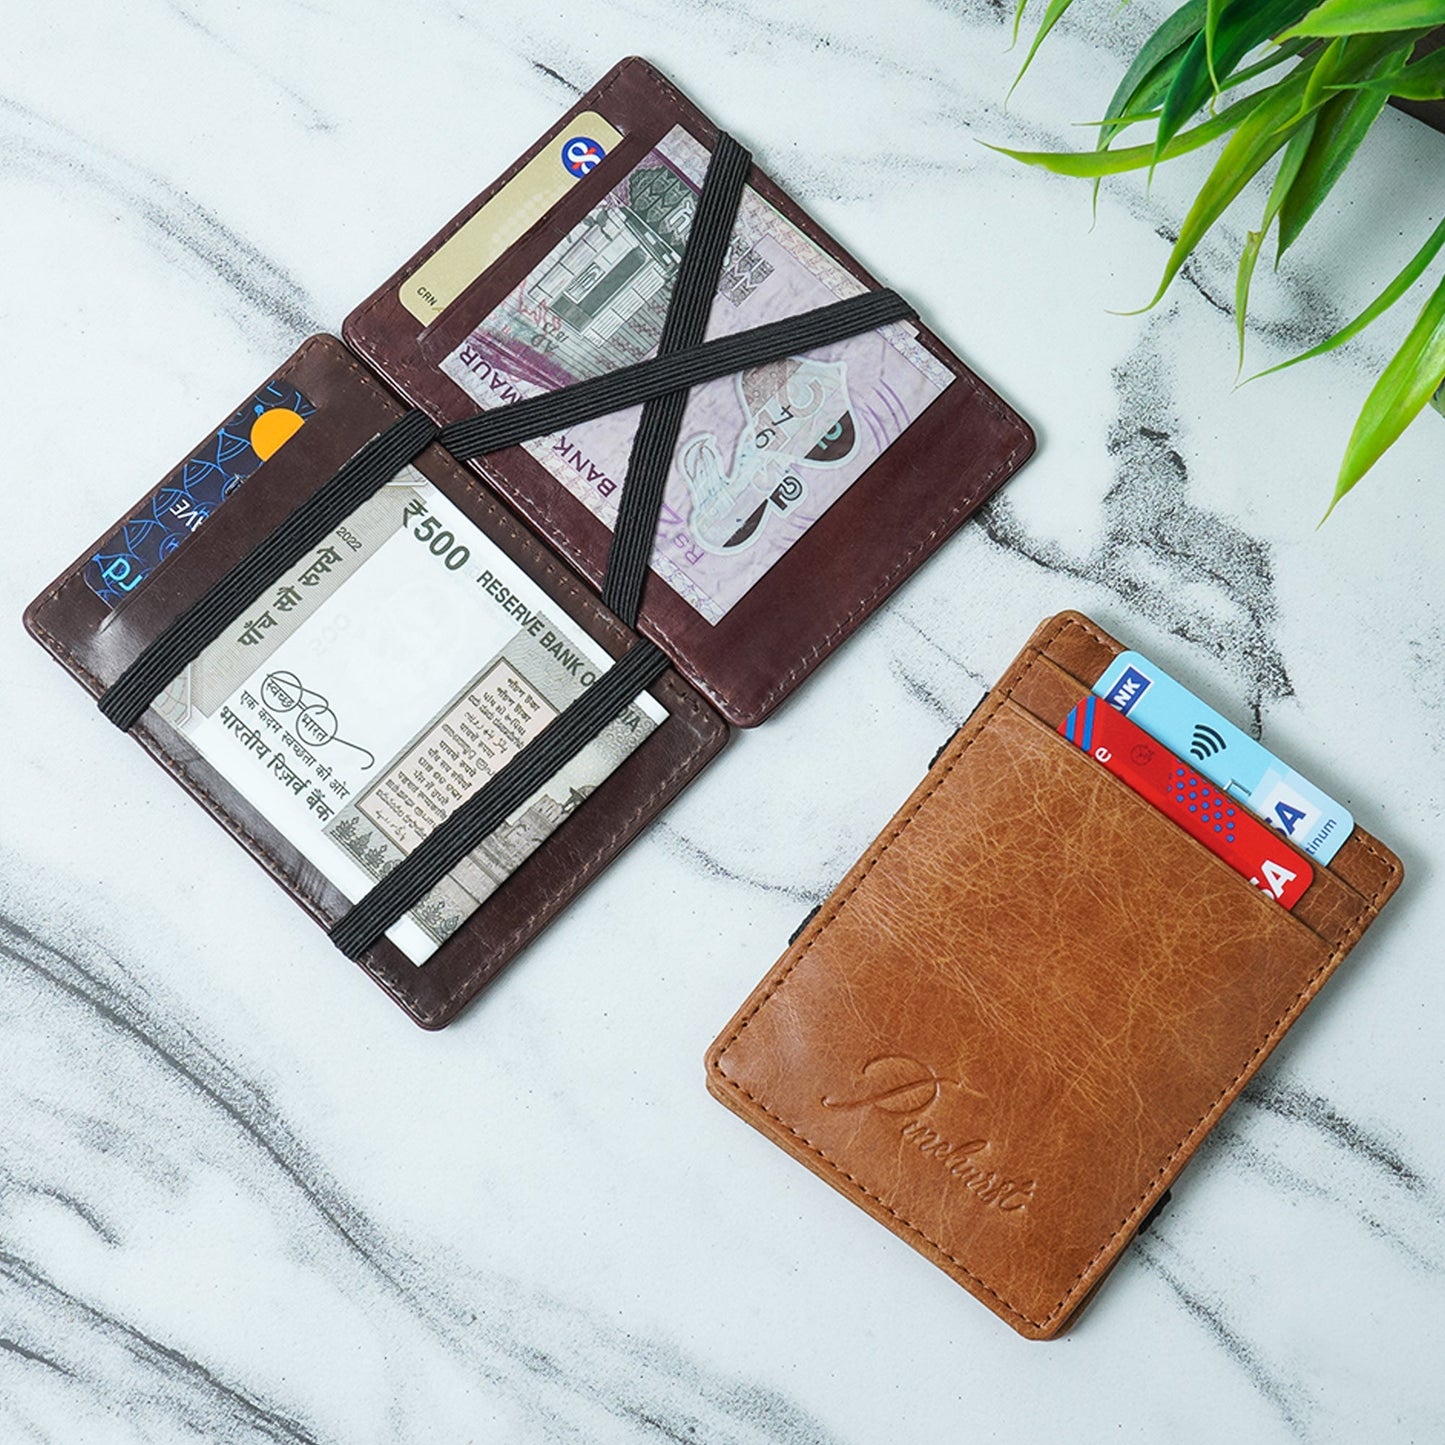 Pinehurst Magic Slim Wallet